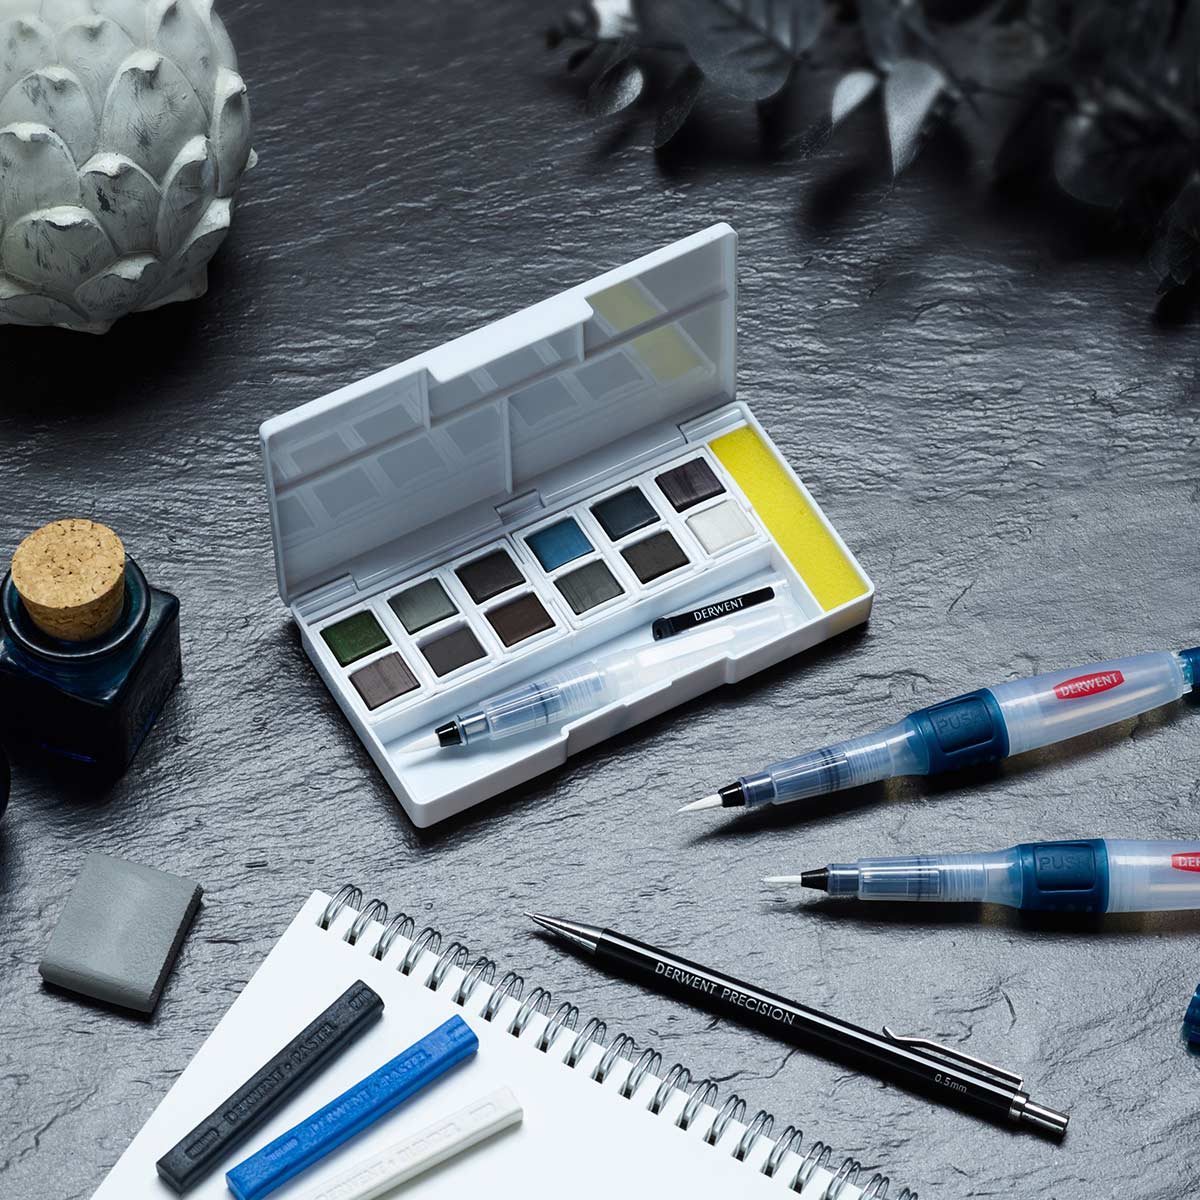 Derwent - Tinted Charcoal 12x Pan Palette Studio Set